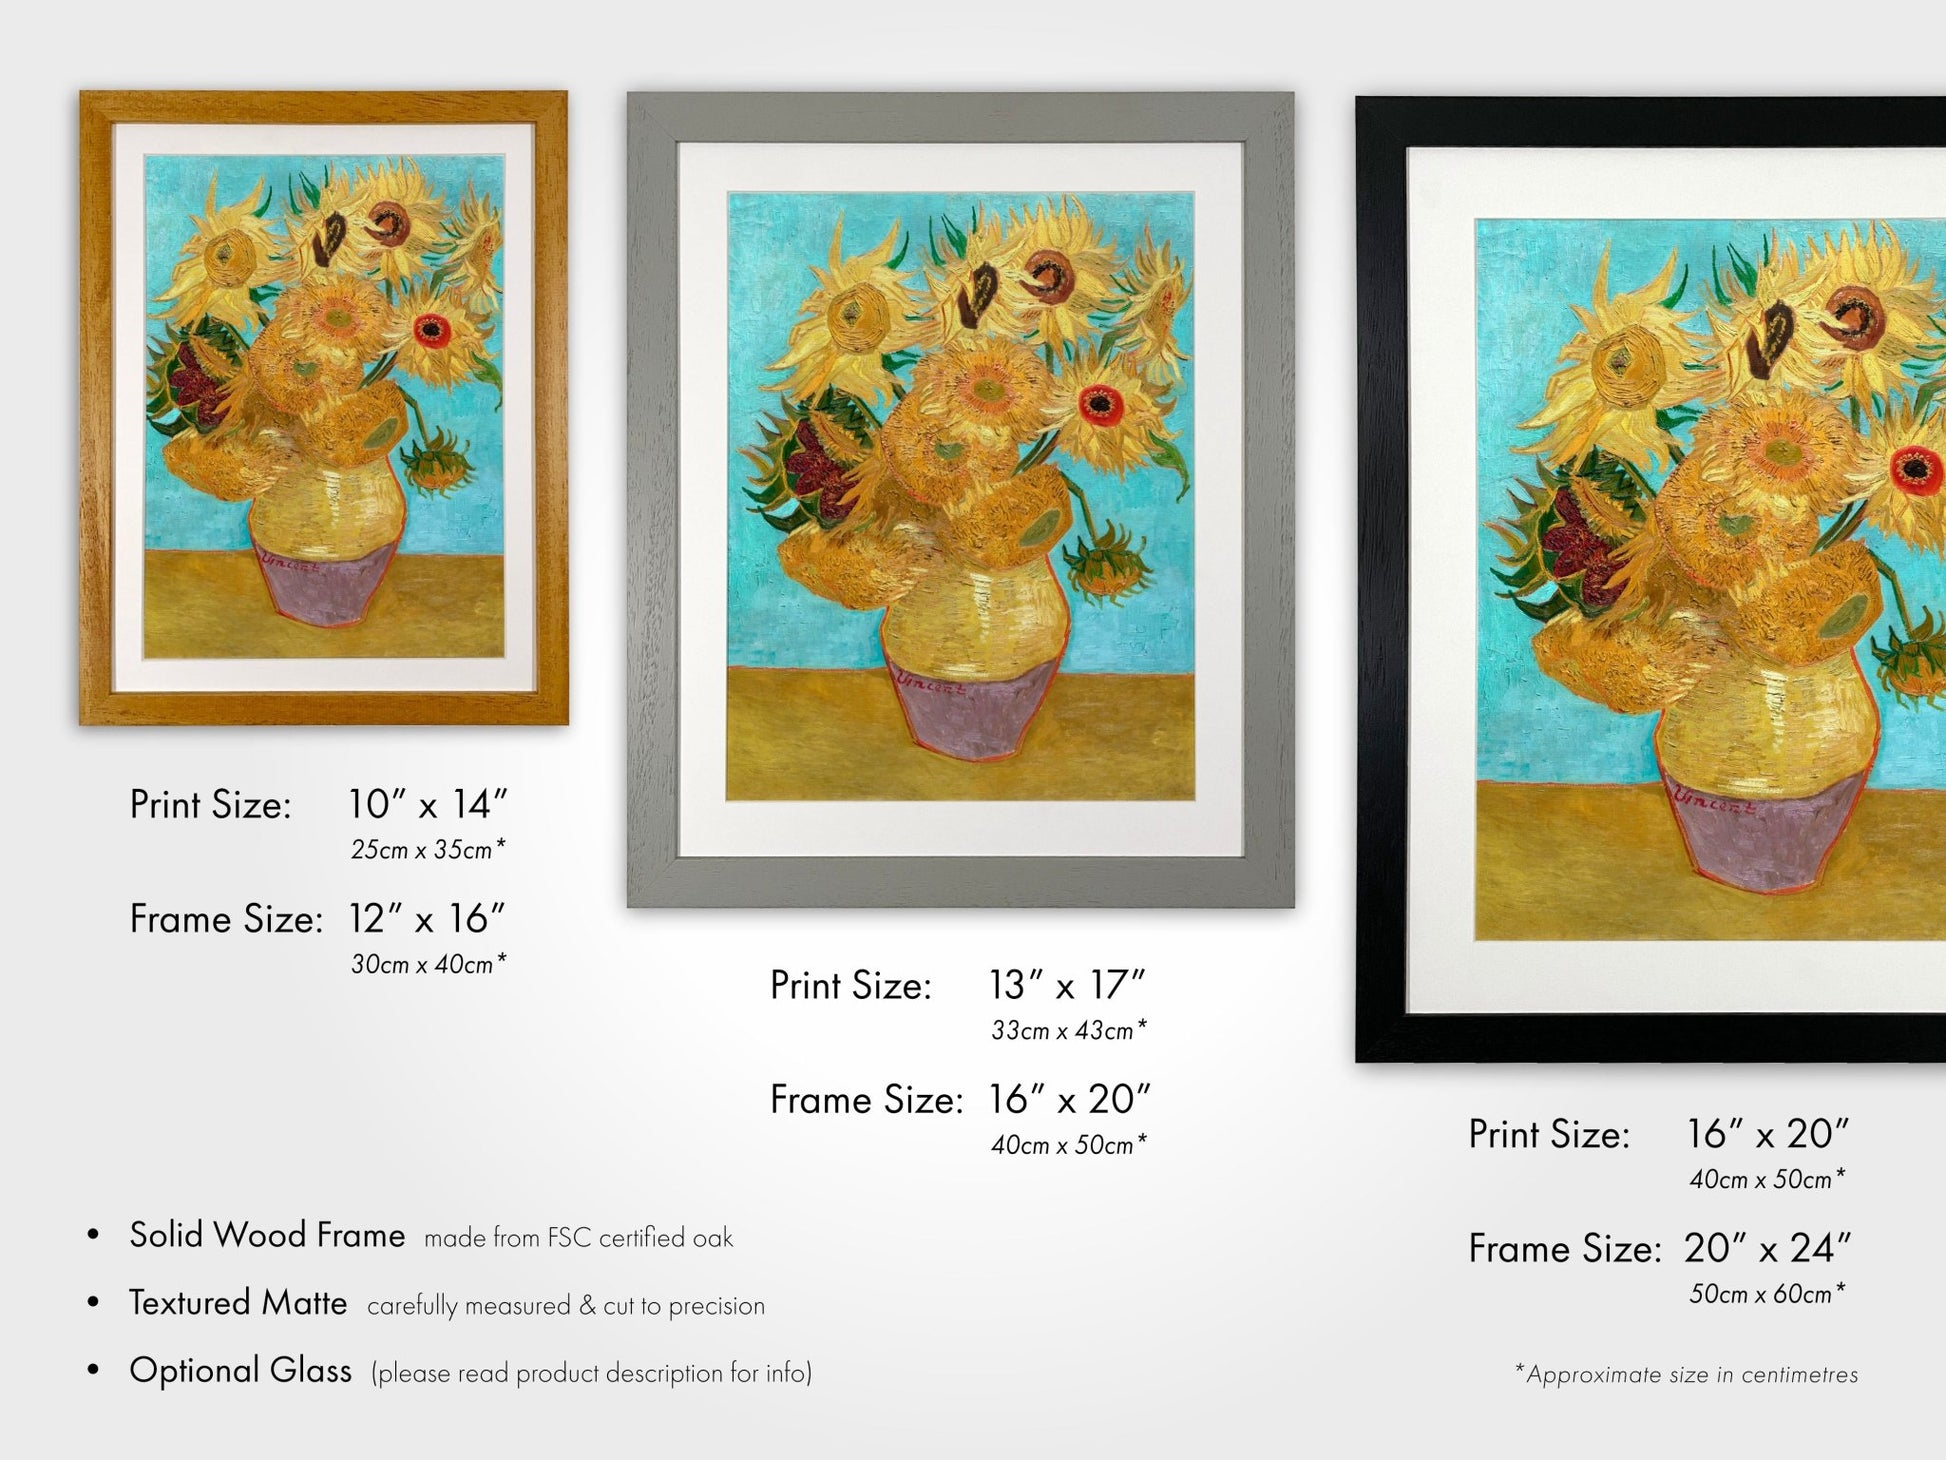 VINCENT VAN GOGH - Vase With Twelve Sunflowers - Pathos Studio -